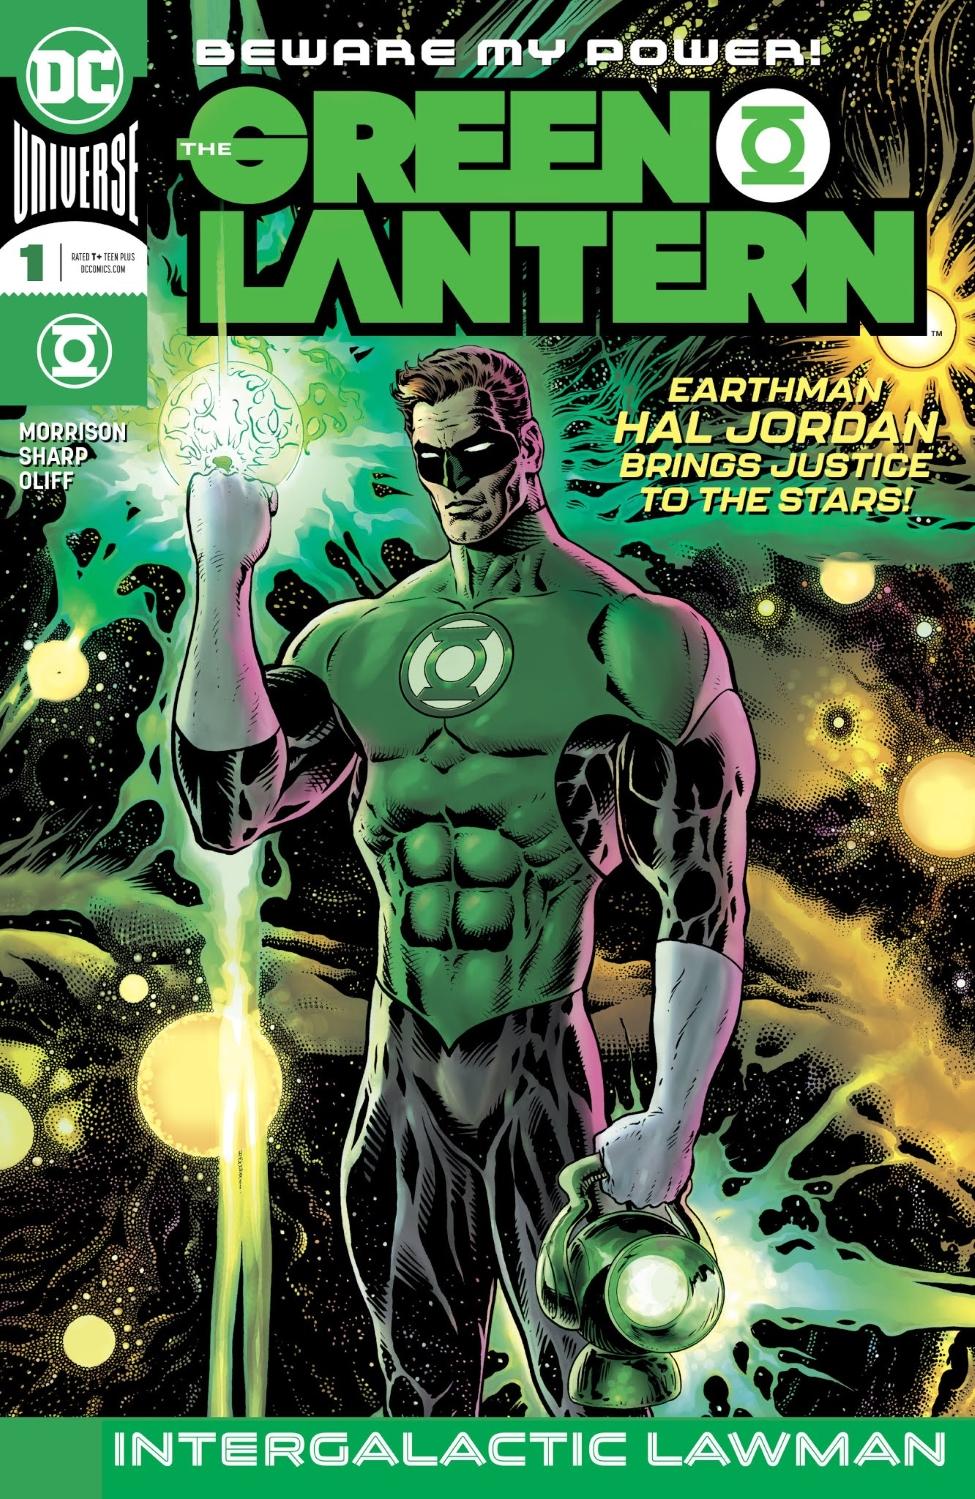 The Green Lantern Vol. 1 #1